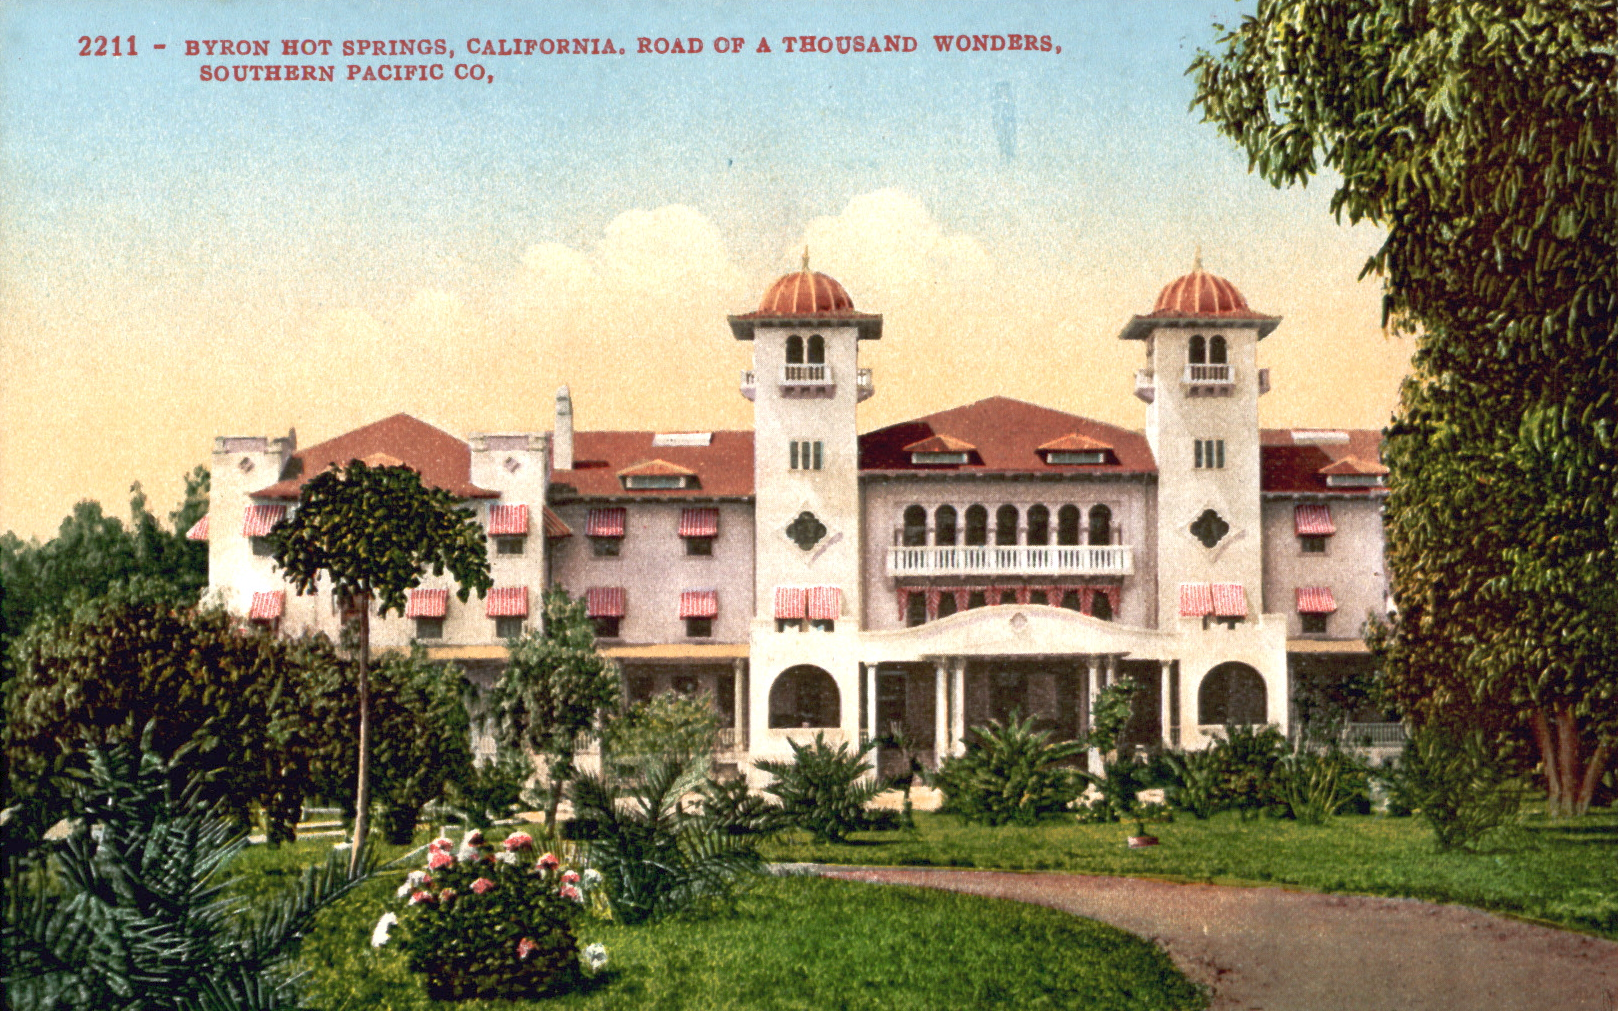 Byron Hot Springs Hotel (Postcard Image)